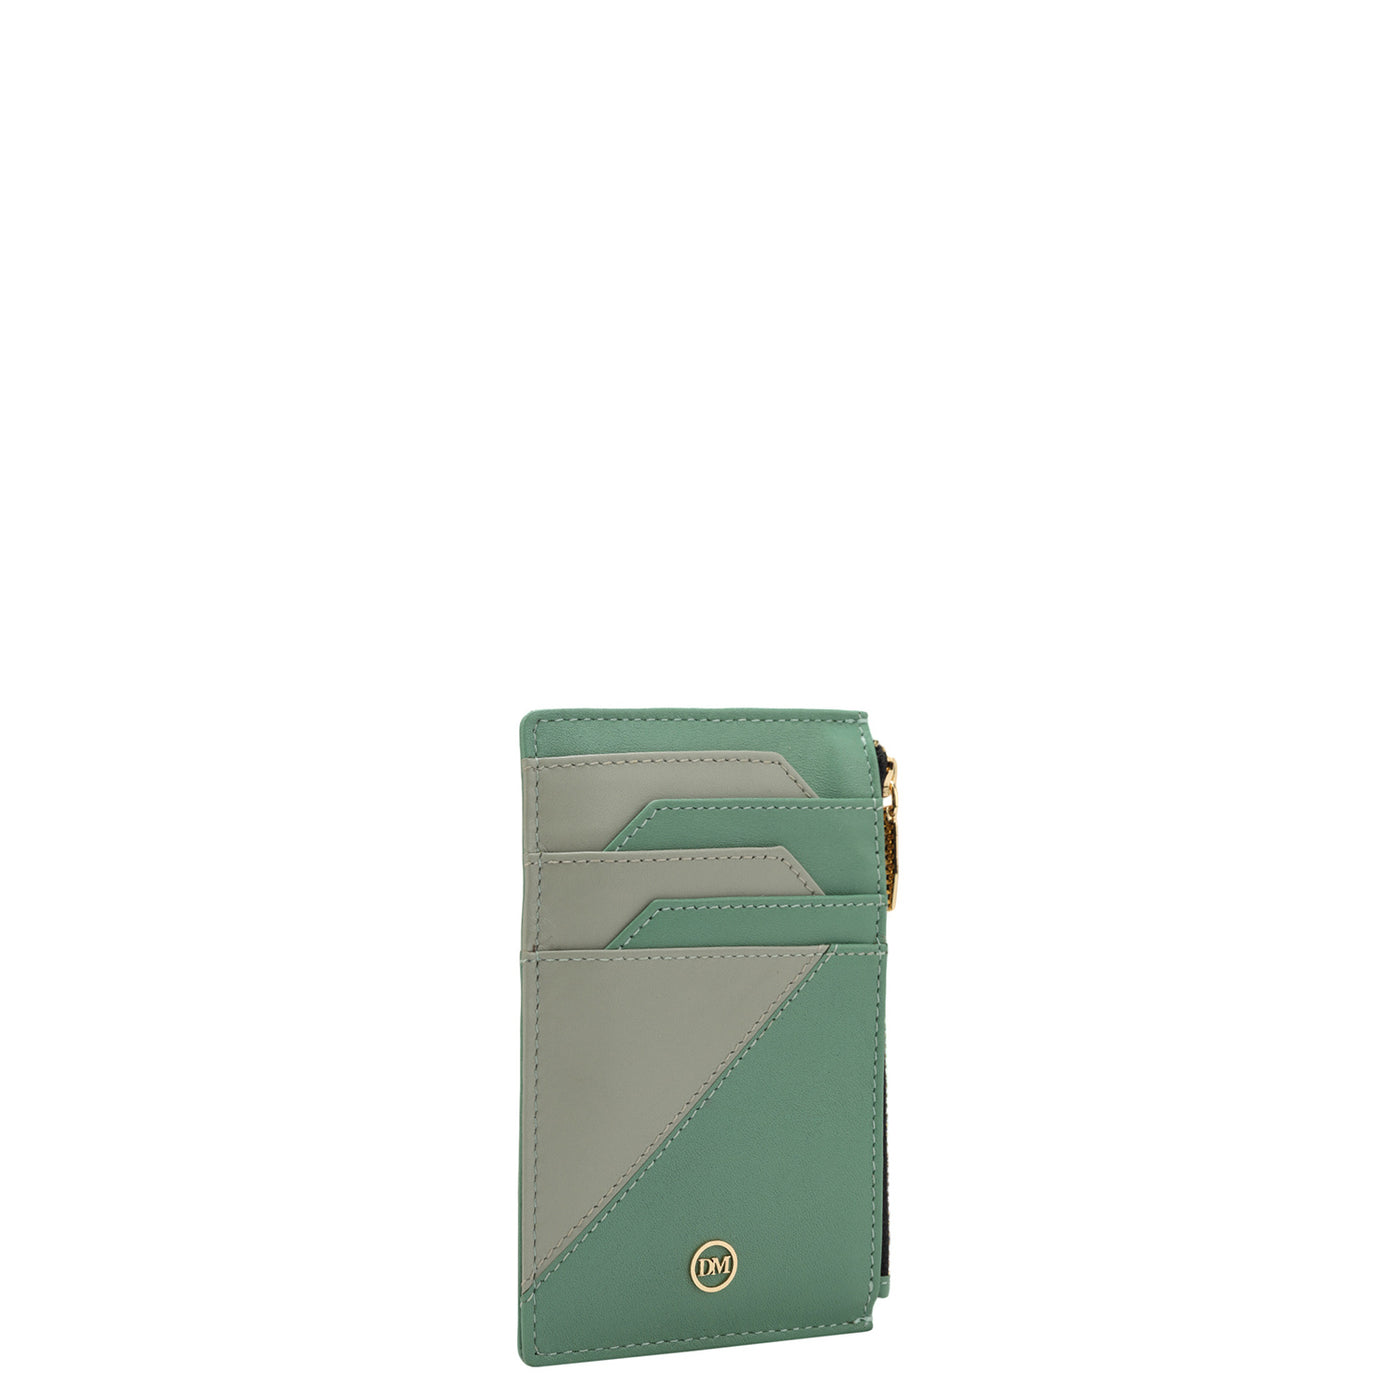 Plain Leather Card Case - Light Green & Grey